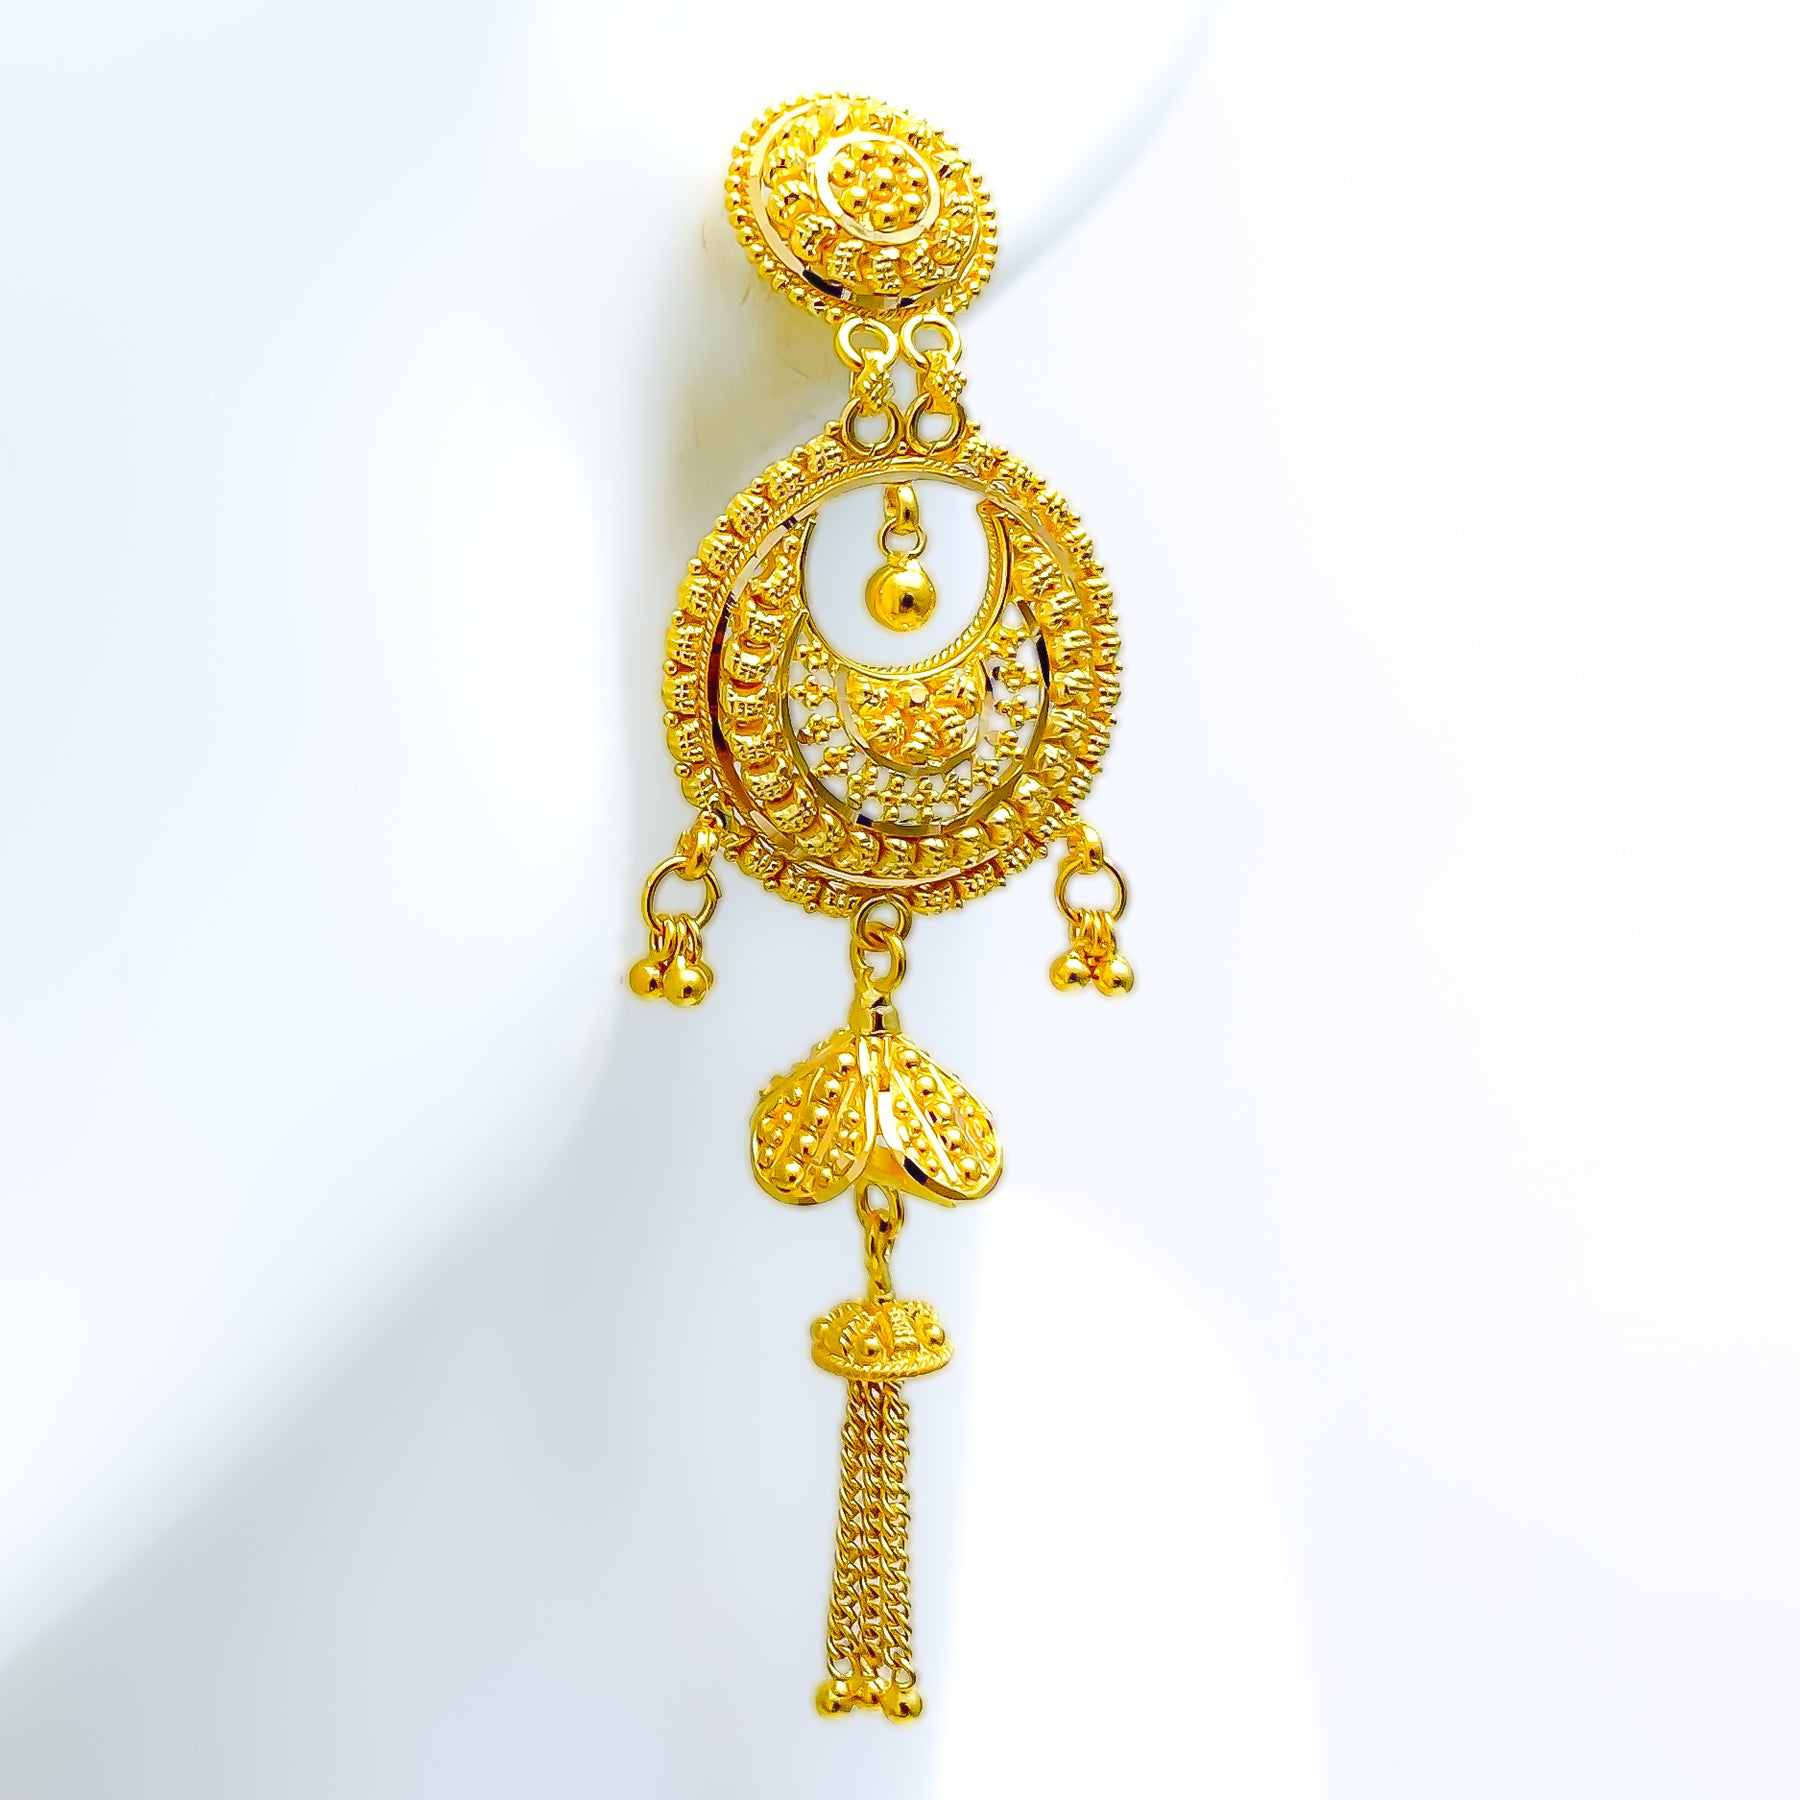 22k Gold Chandbali Earrings - erfc25499 - 22kt Gold Chandbali Earrings.  Earrings are designed in Chand Bali style, Detailed filigree work in c